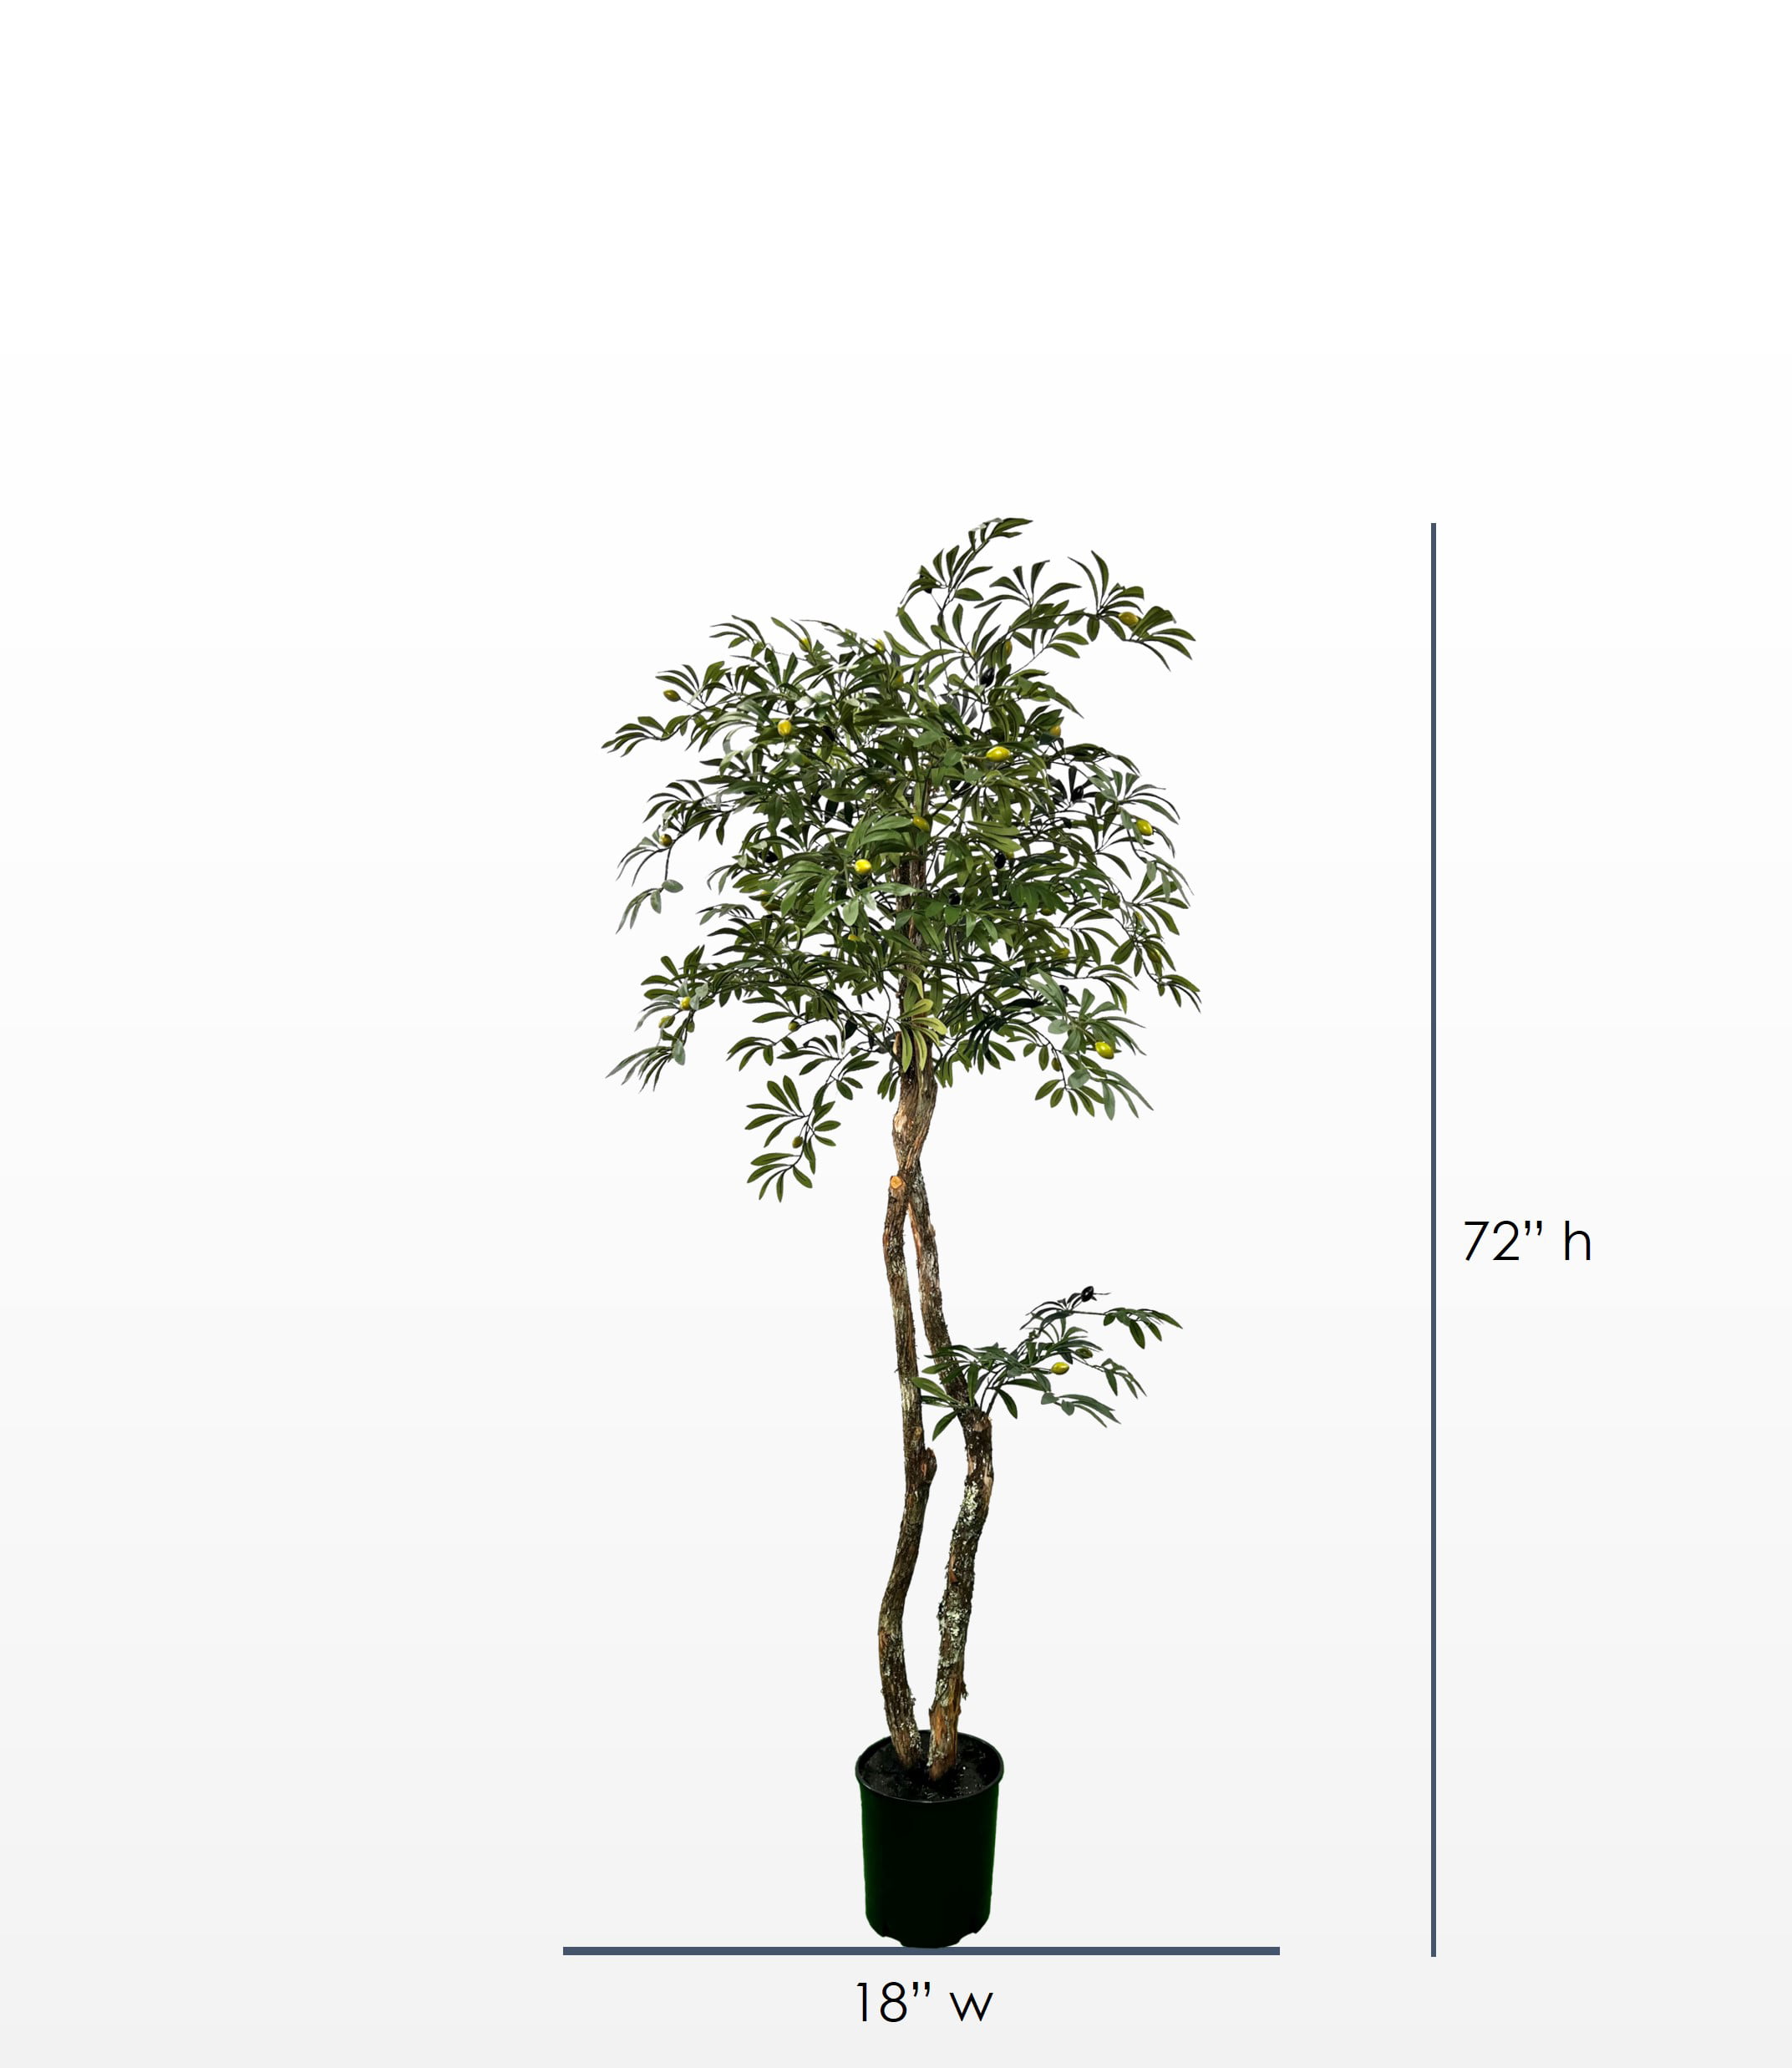 350 cm green artificial olive tree, Mediterranean